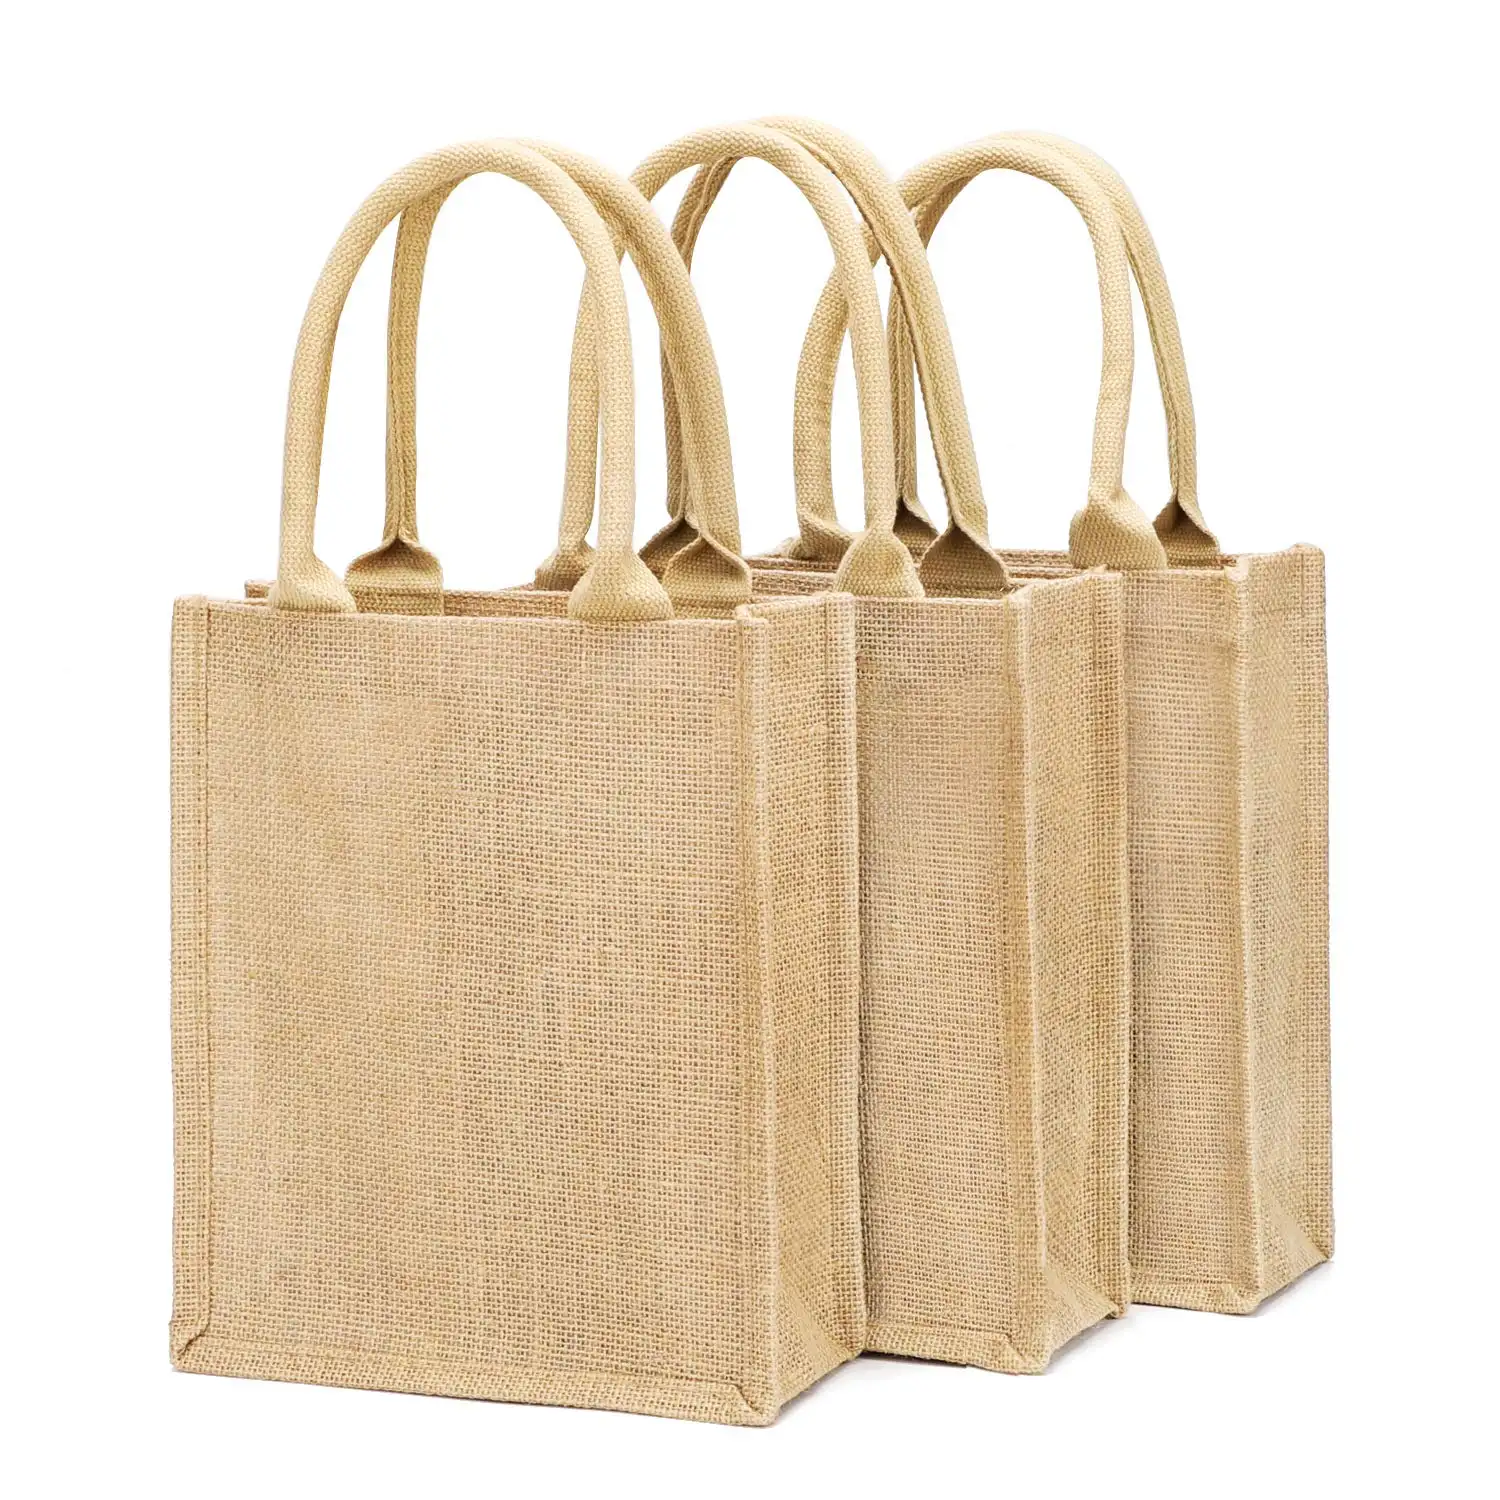 Custom Zipper Diy Blank Eco-Friendly Jute Bag Medium Reusable Jute Handle Bag Shopping Burlap Tote Bag